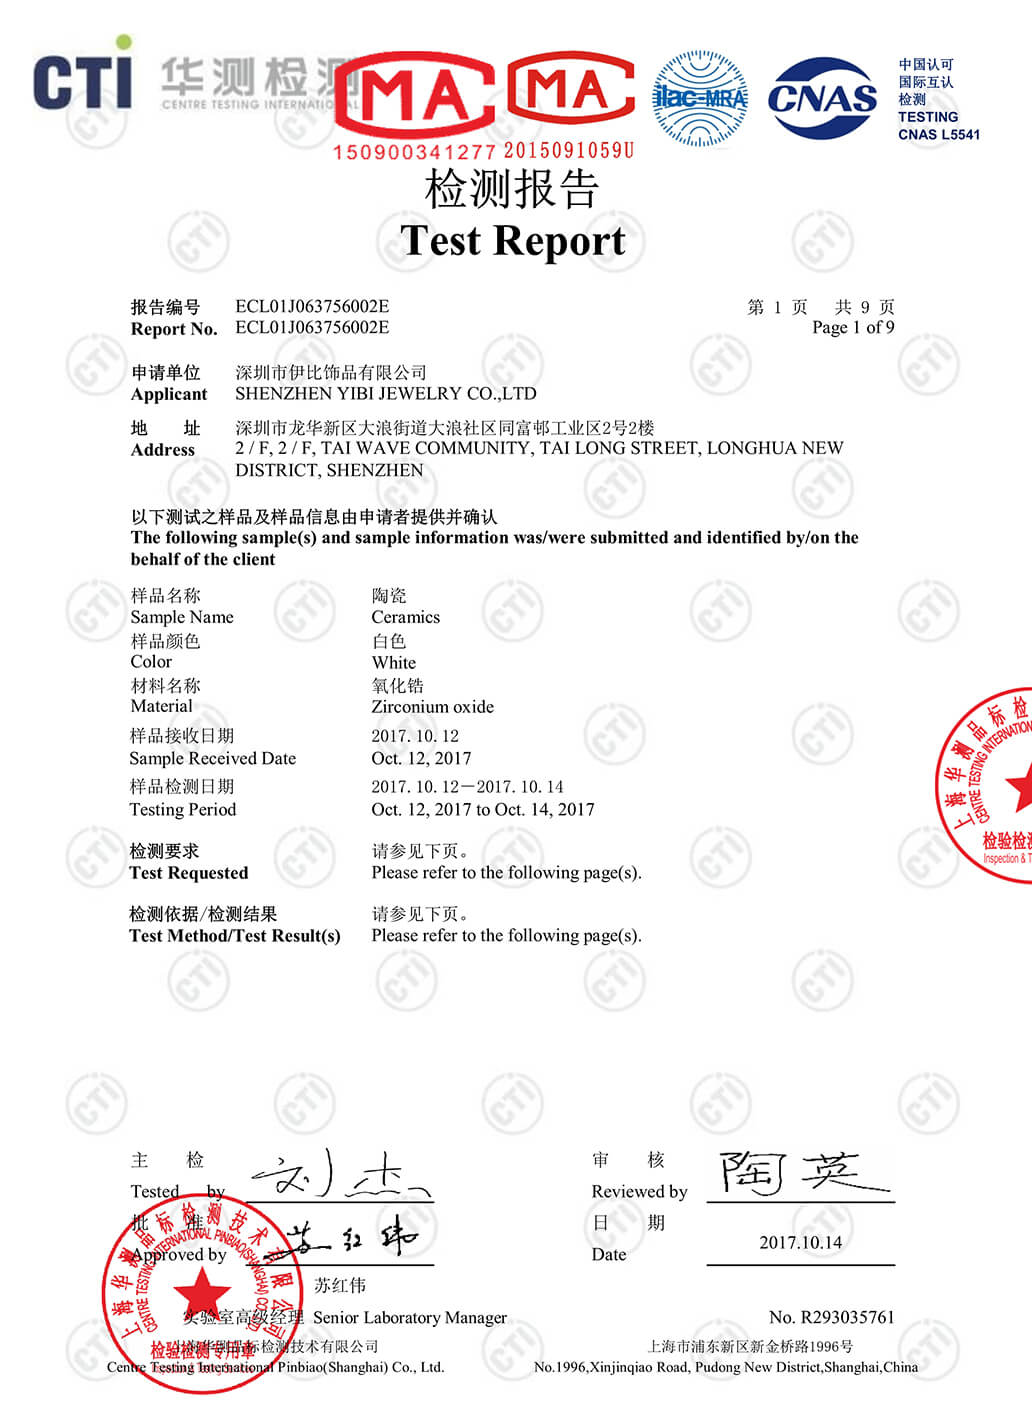 YIBI Jewelry White-Ceramic CTI Certification